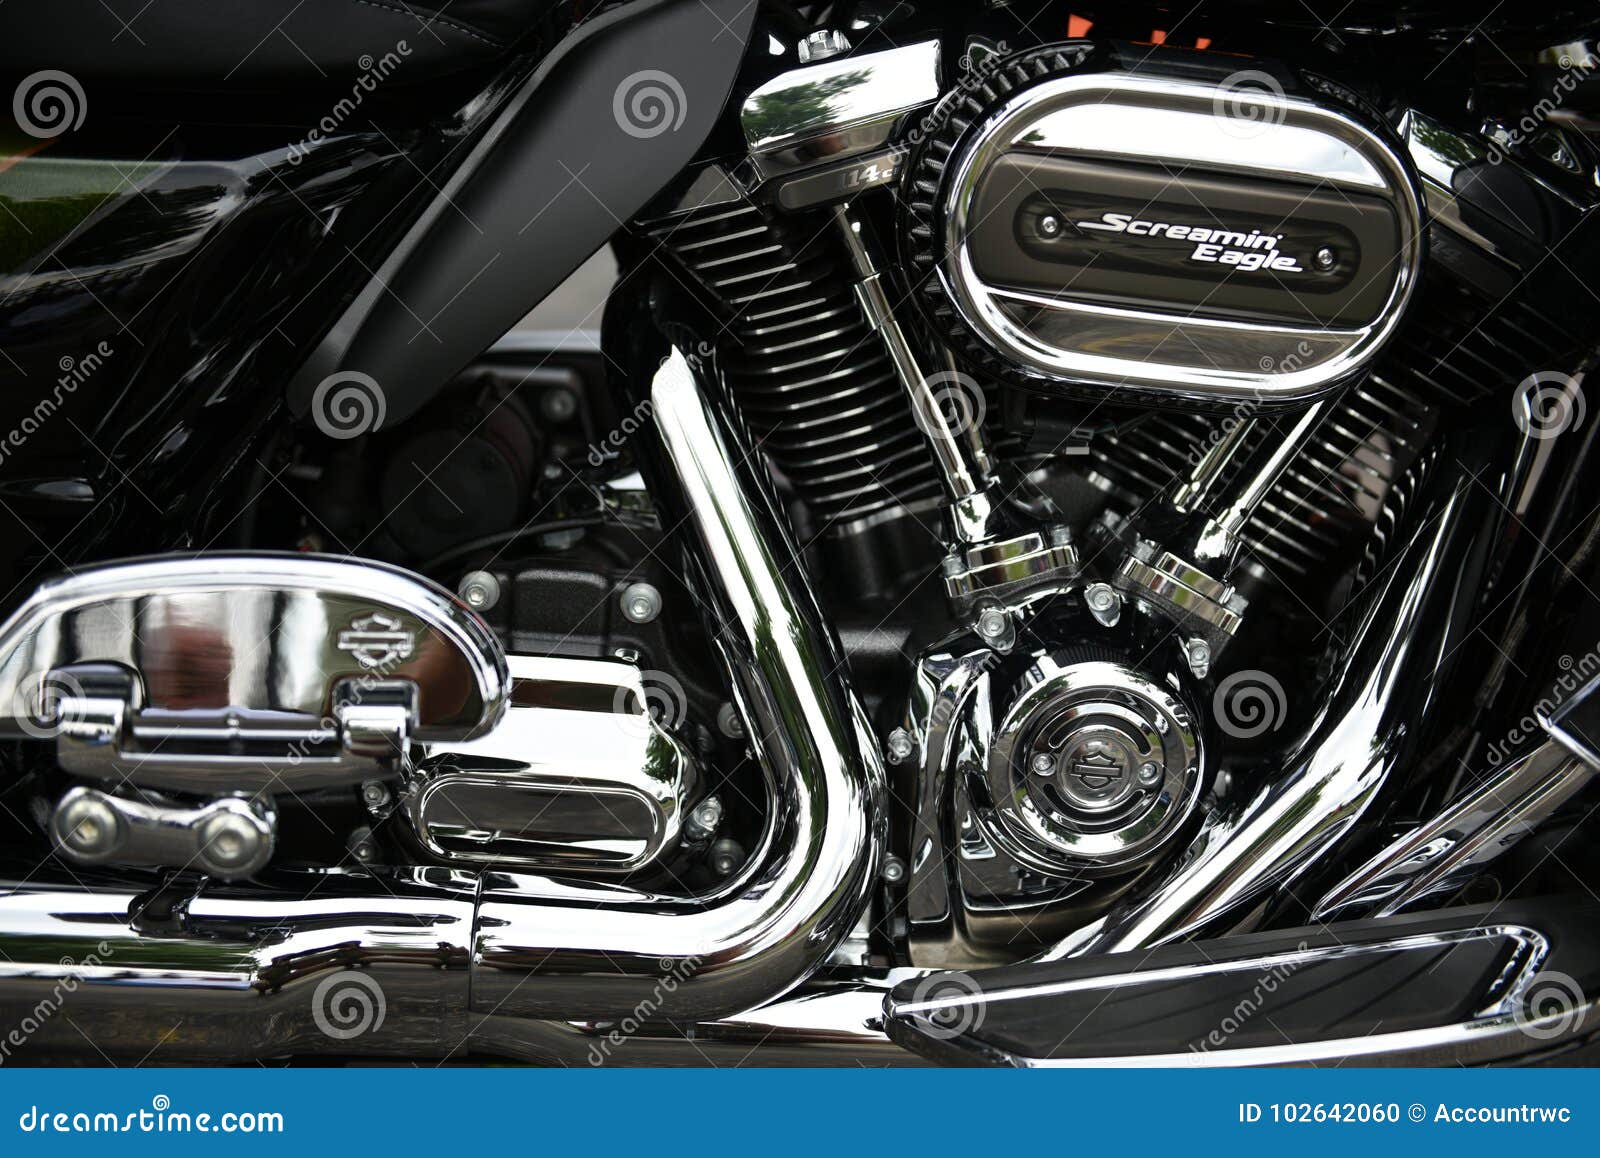 Harley Davidson Screamin Eagle Motorcycle Editorial Image Image Of Close Engine 102642060